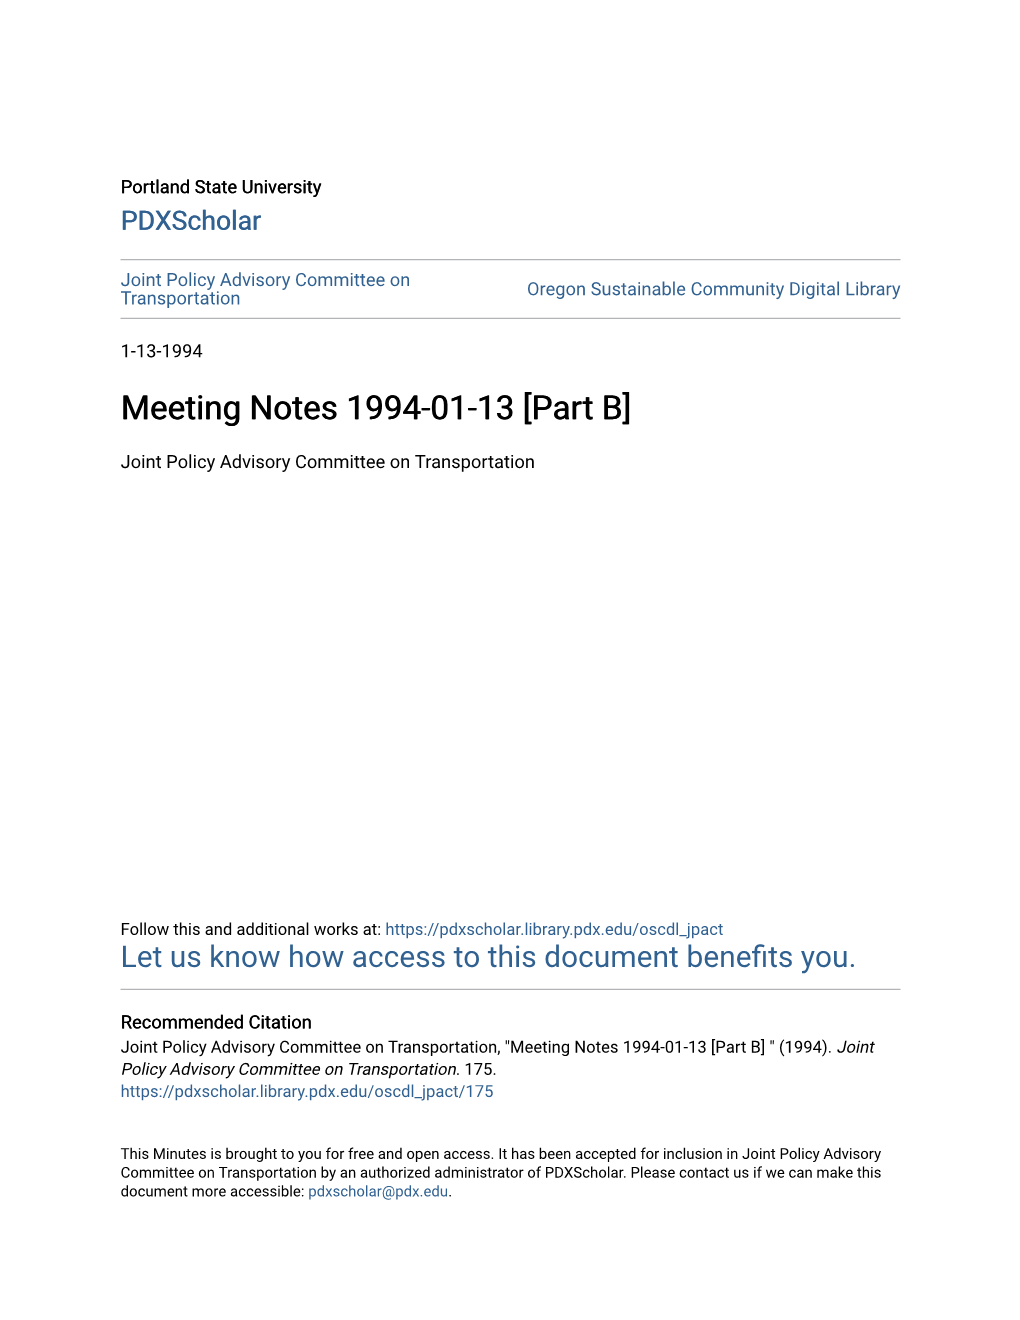 Meeting Notes 1994-01-13 [Part B]